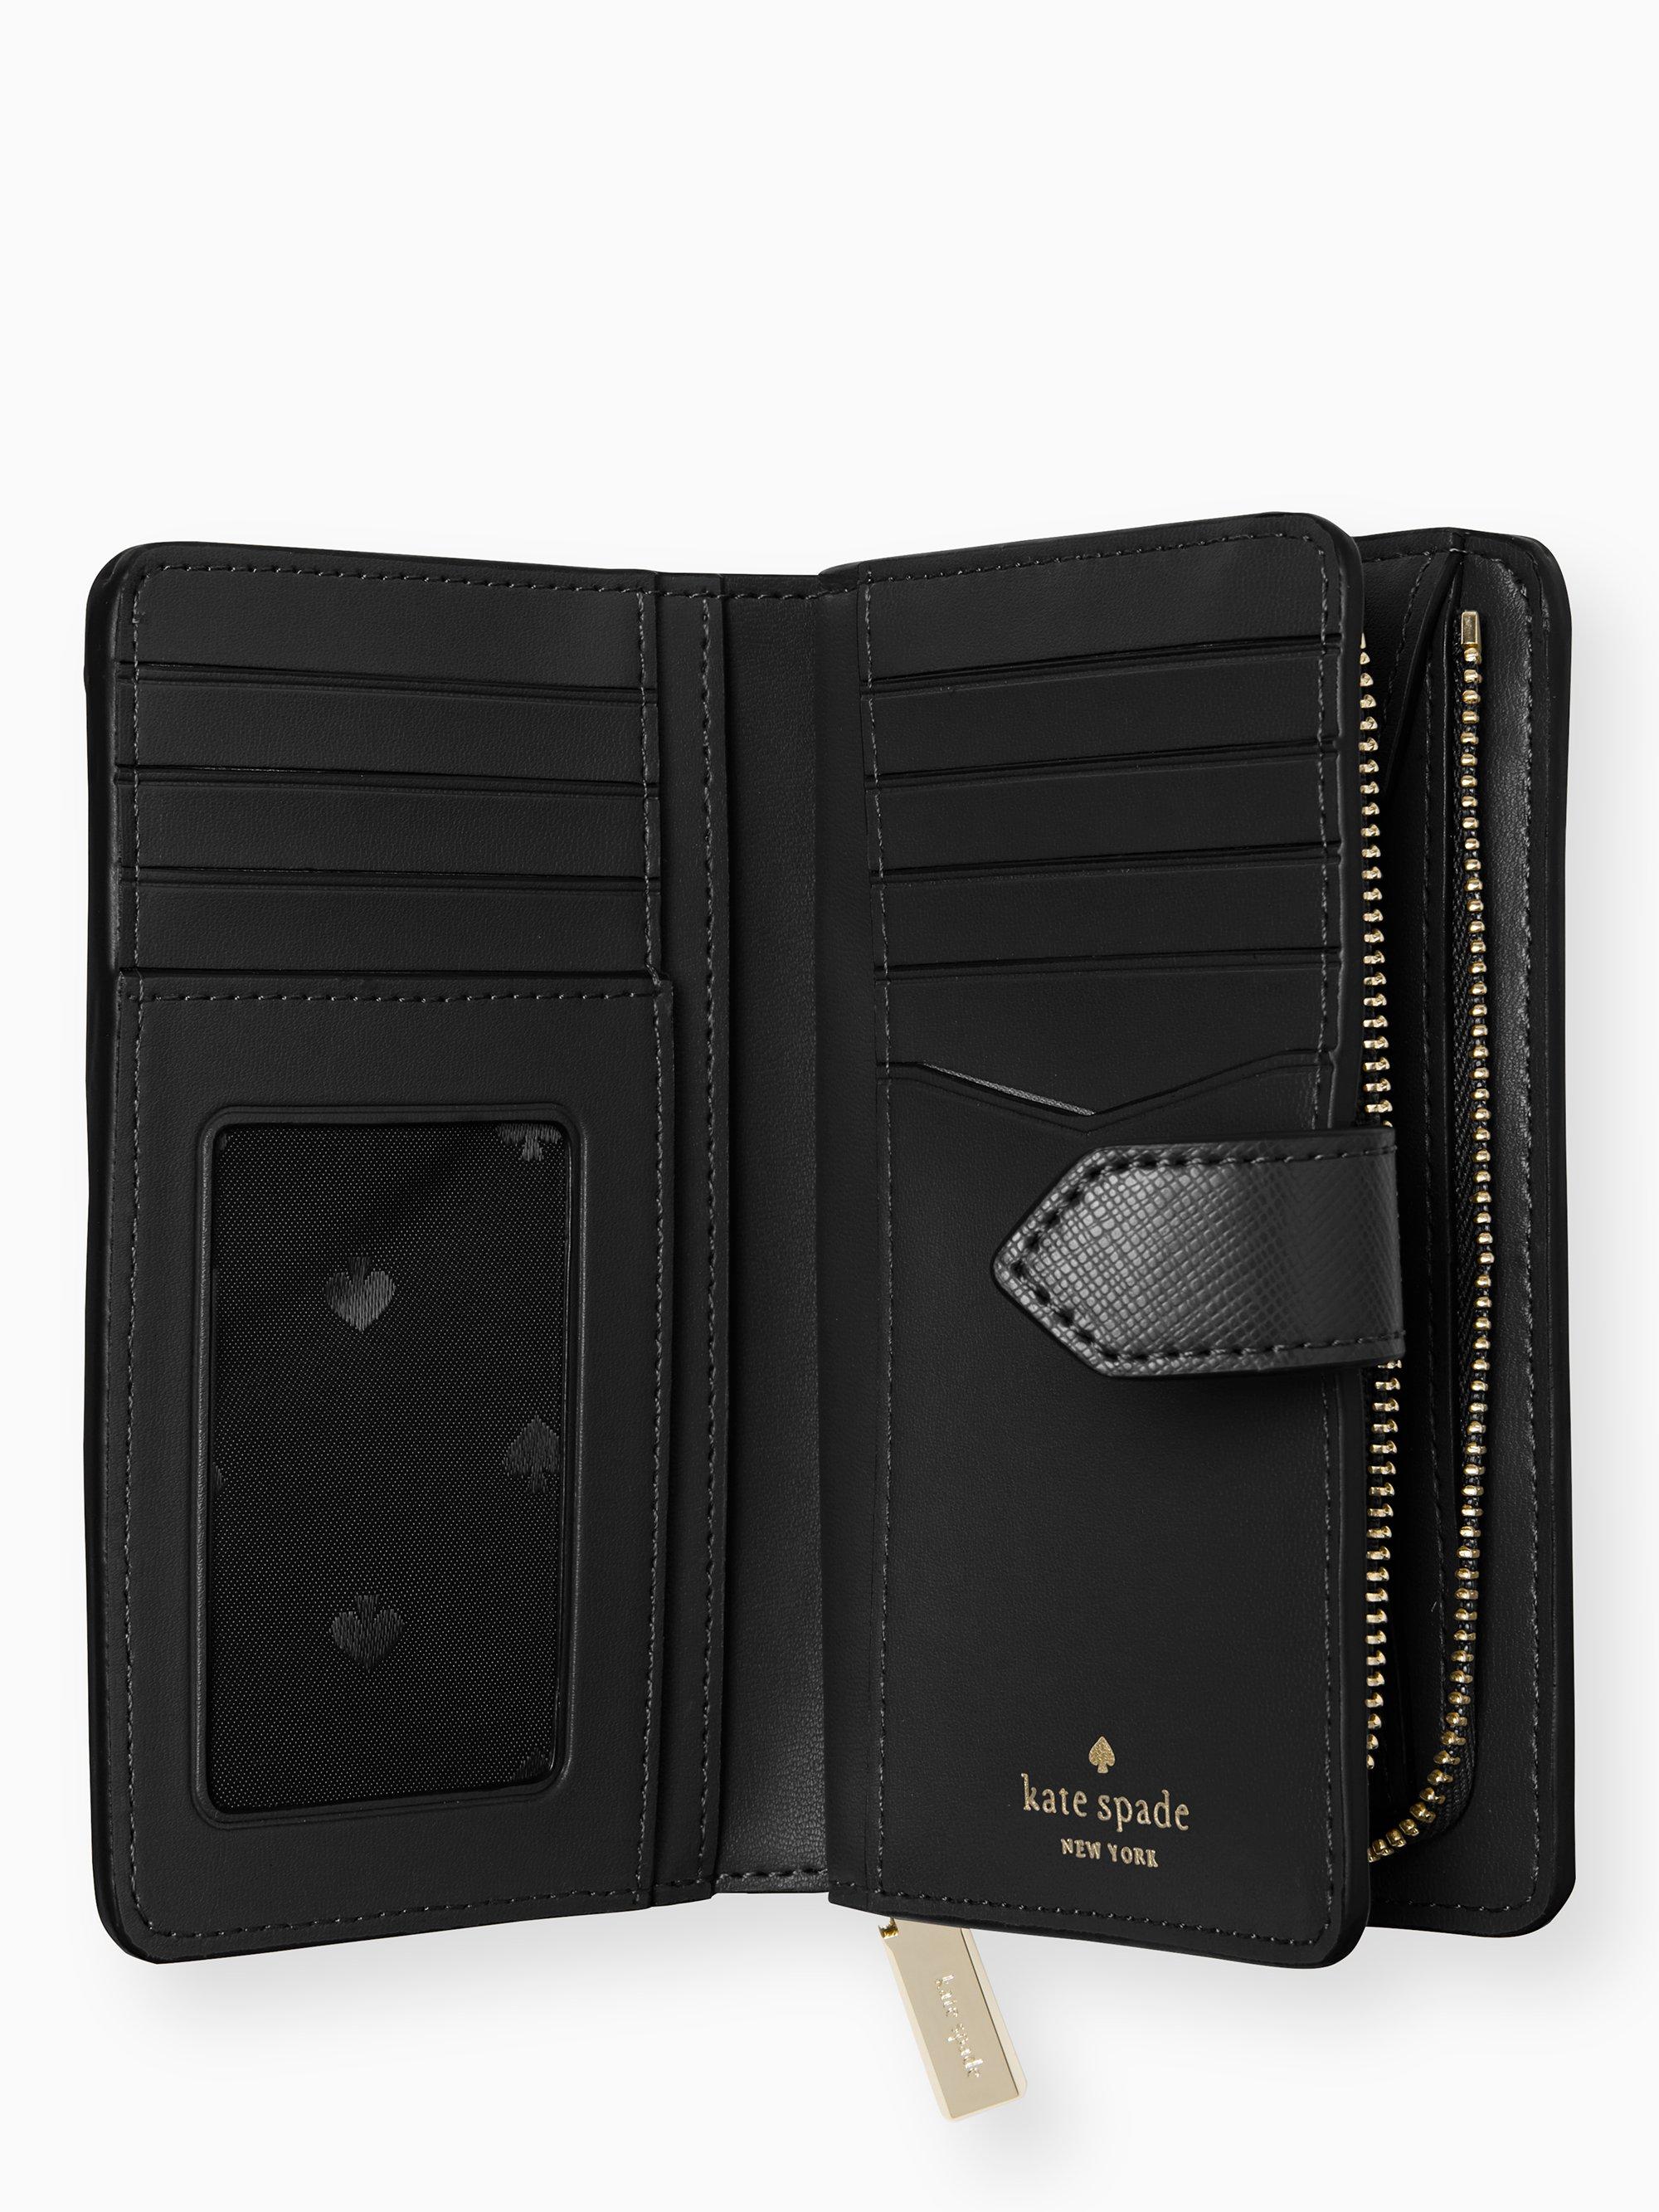 Kate Spade Staci Medium Compact Bifold Wallet in Black - Lyst